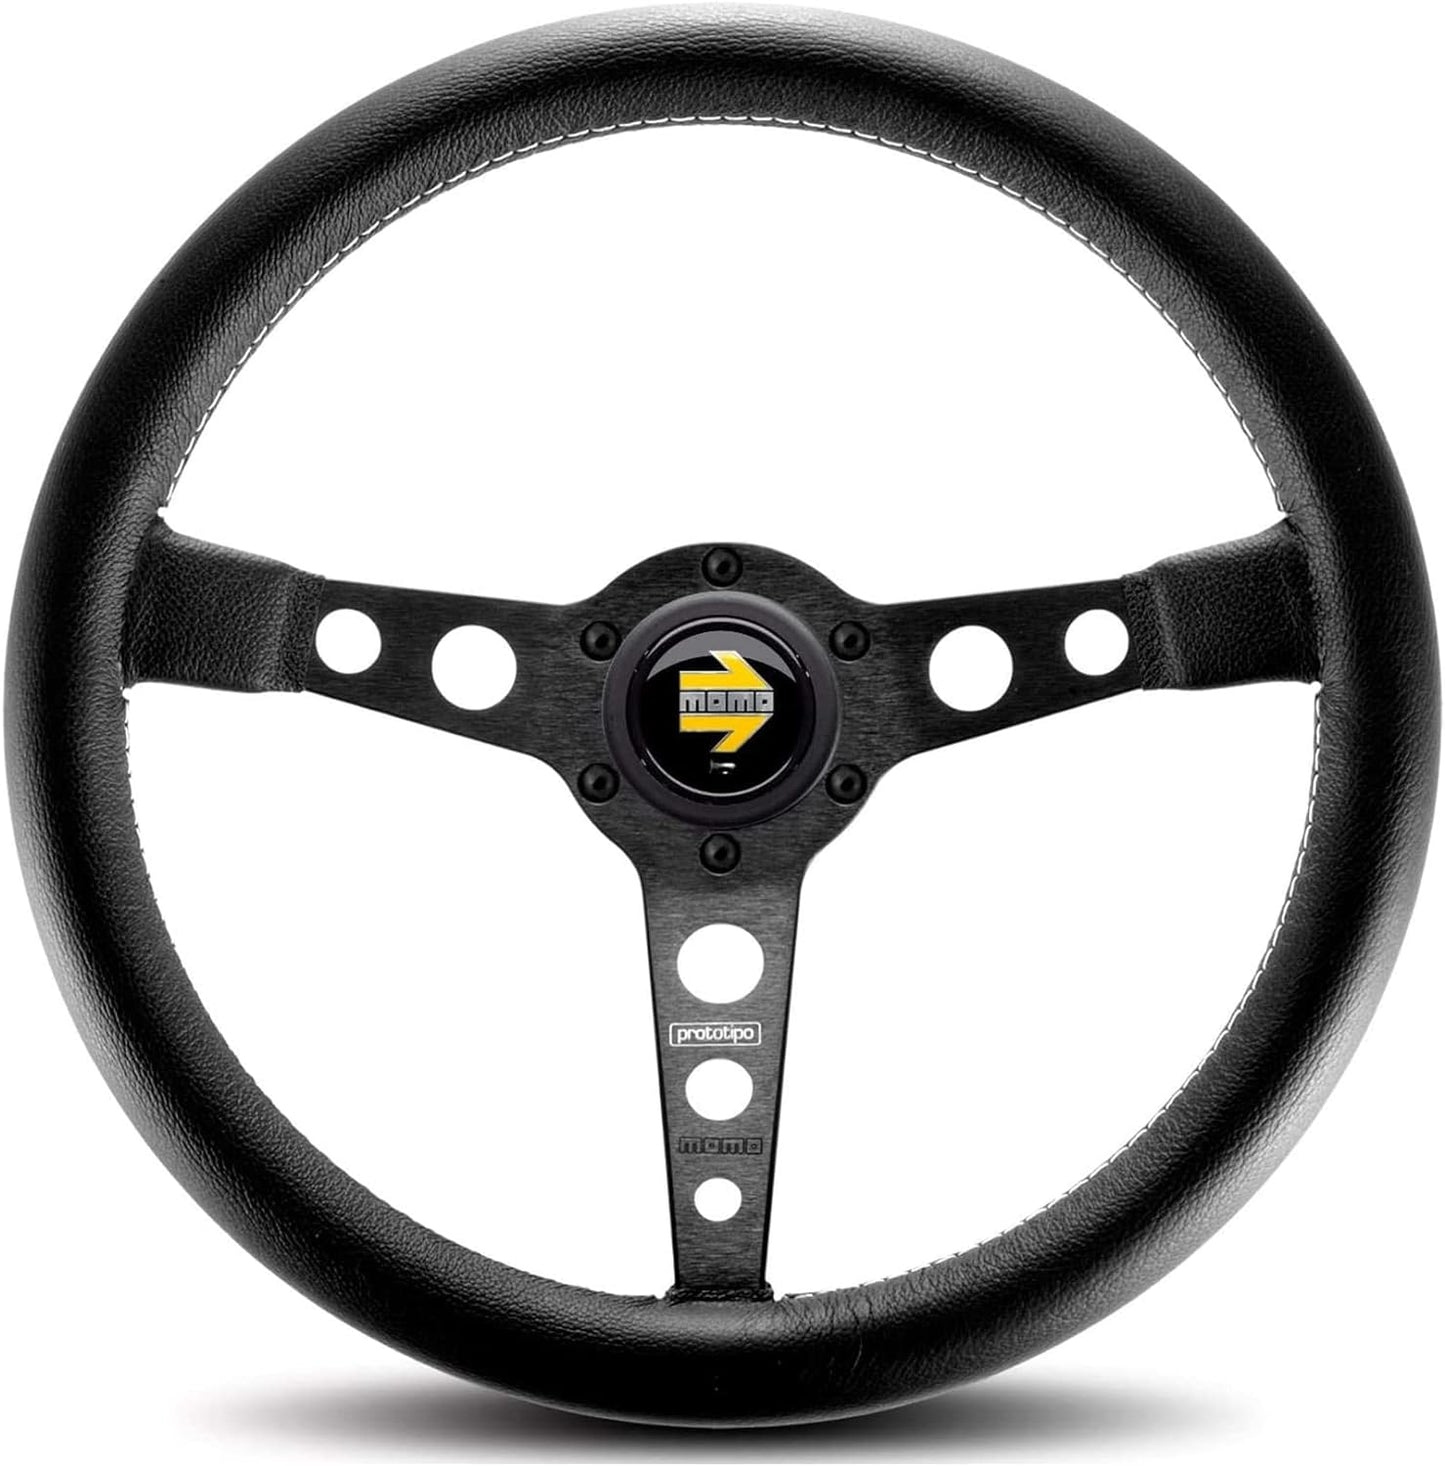 MOMO Prototipo Steering Wheel, Black (350mm) - Sierra Madre Collection